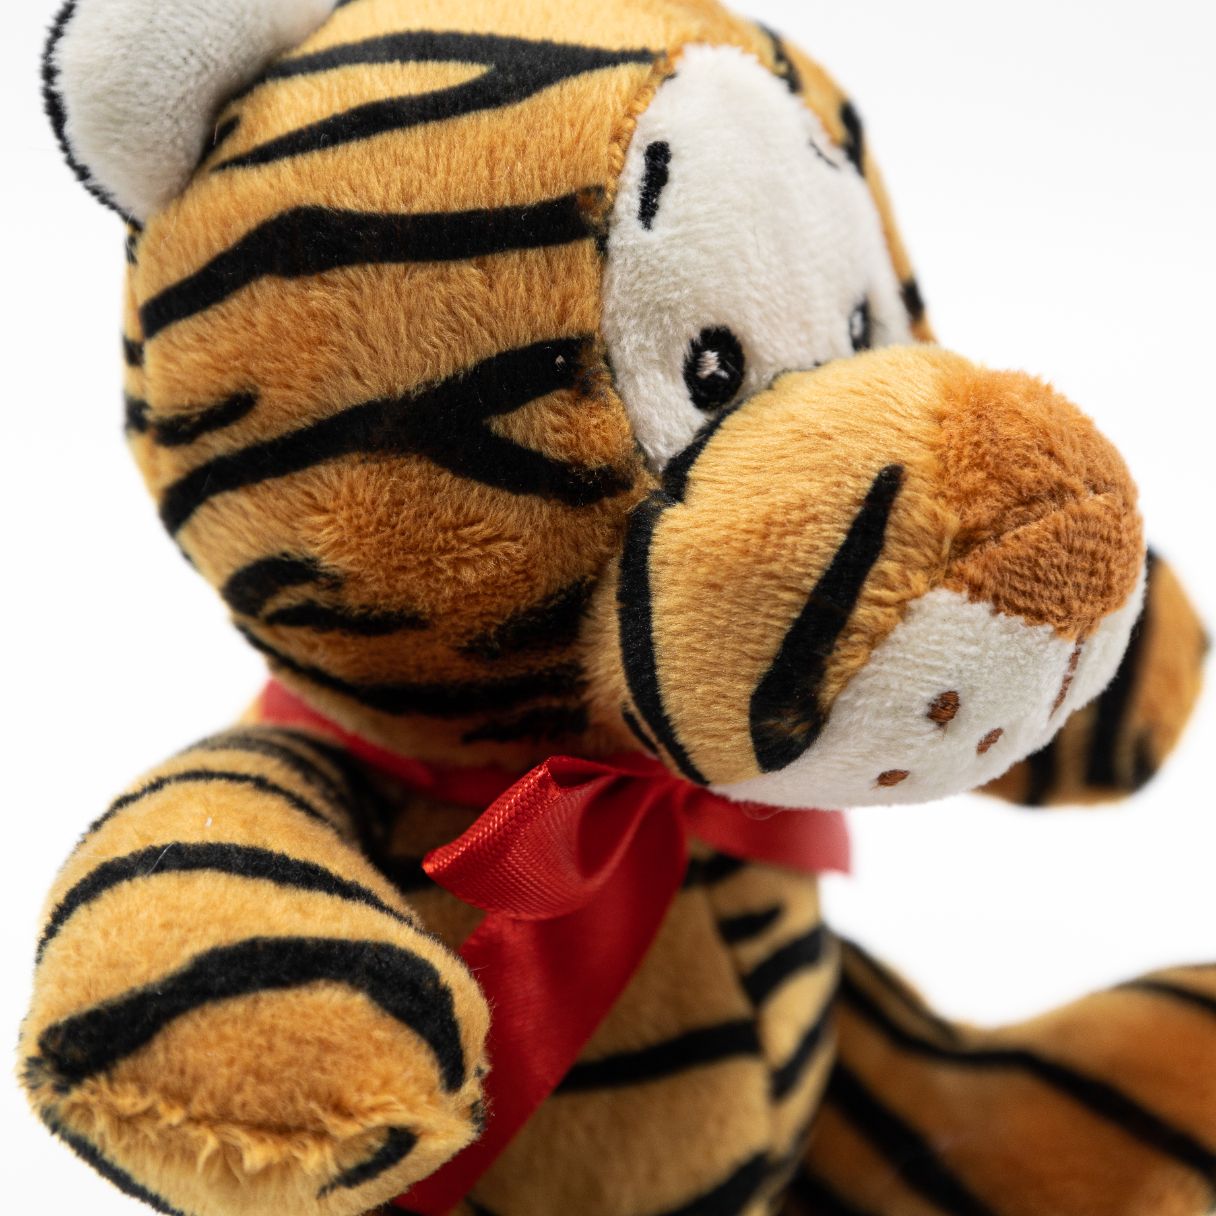 Teddytime Jungle Tiger Soft Toy 20cm